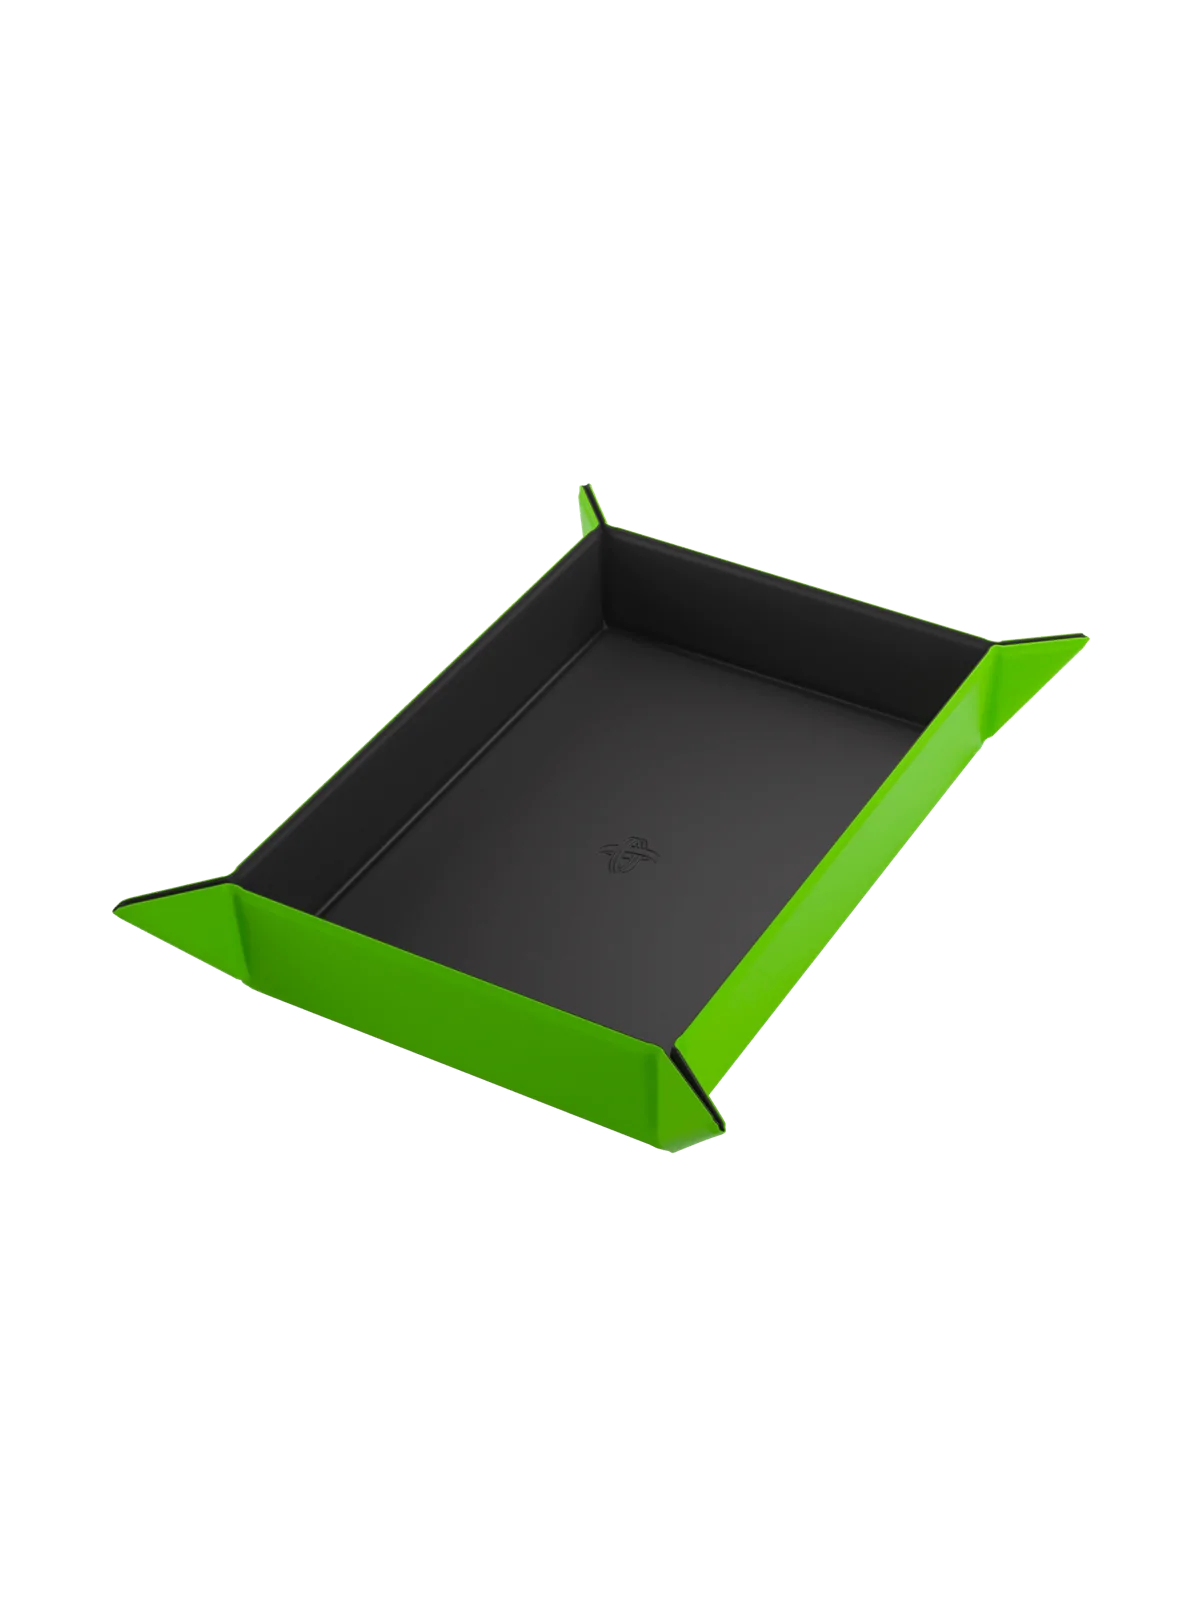 Comprar Magnetic Dice Tray Rectangular Black/Green barato al mejor pre